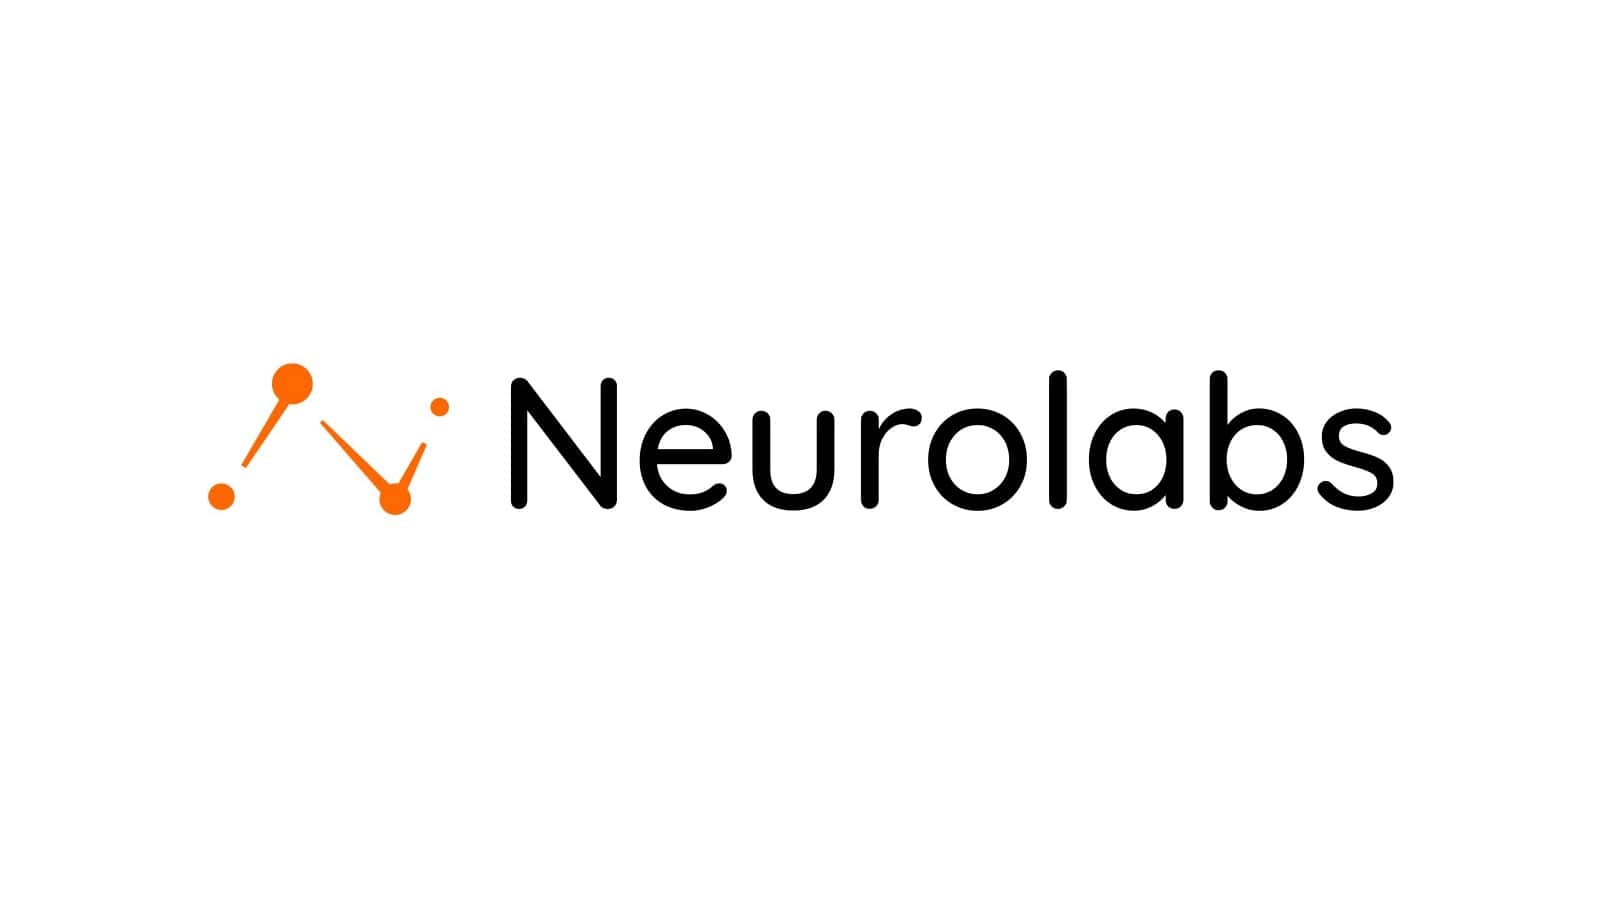 Neurolabs Logo